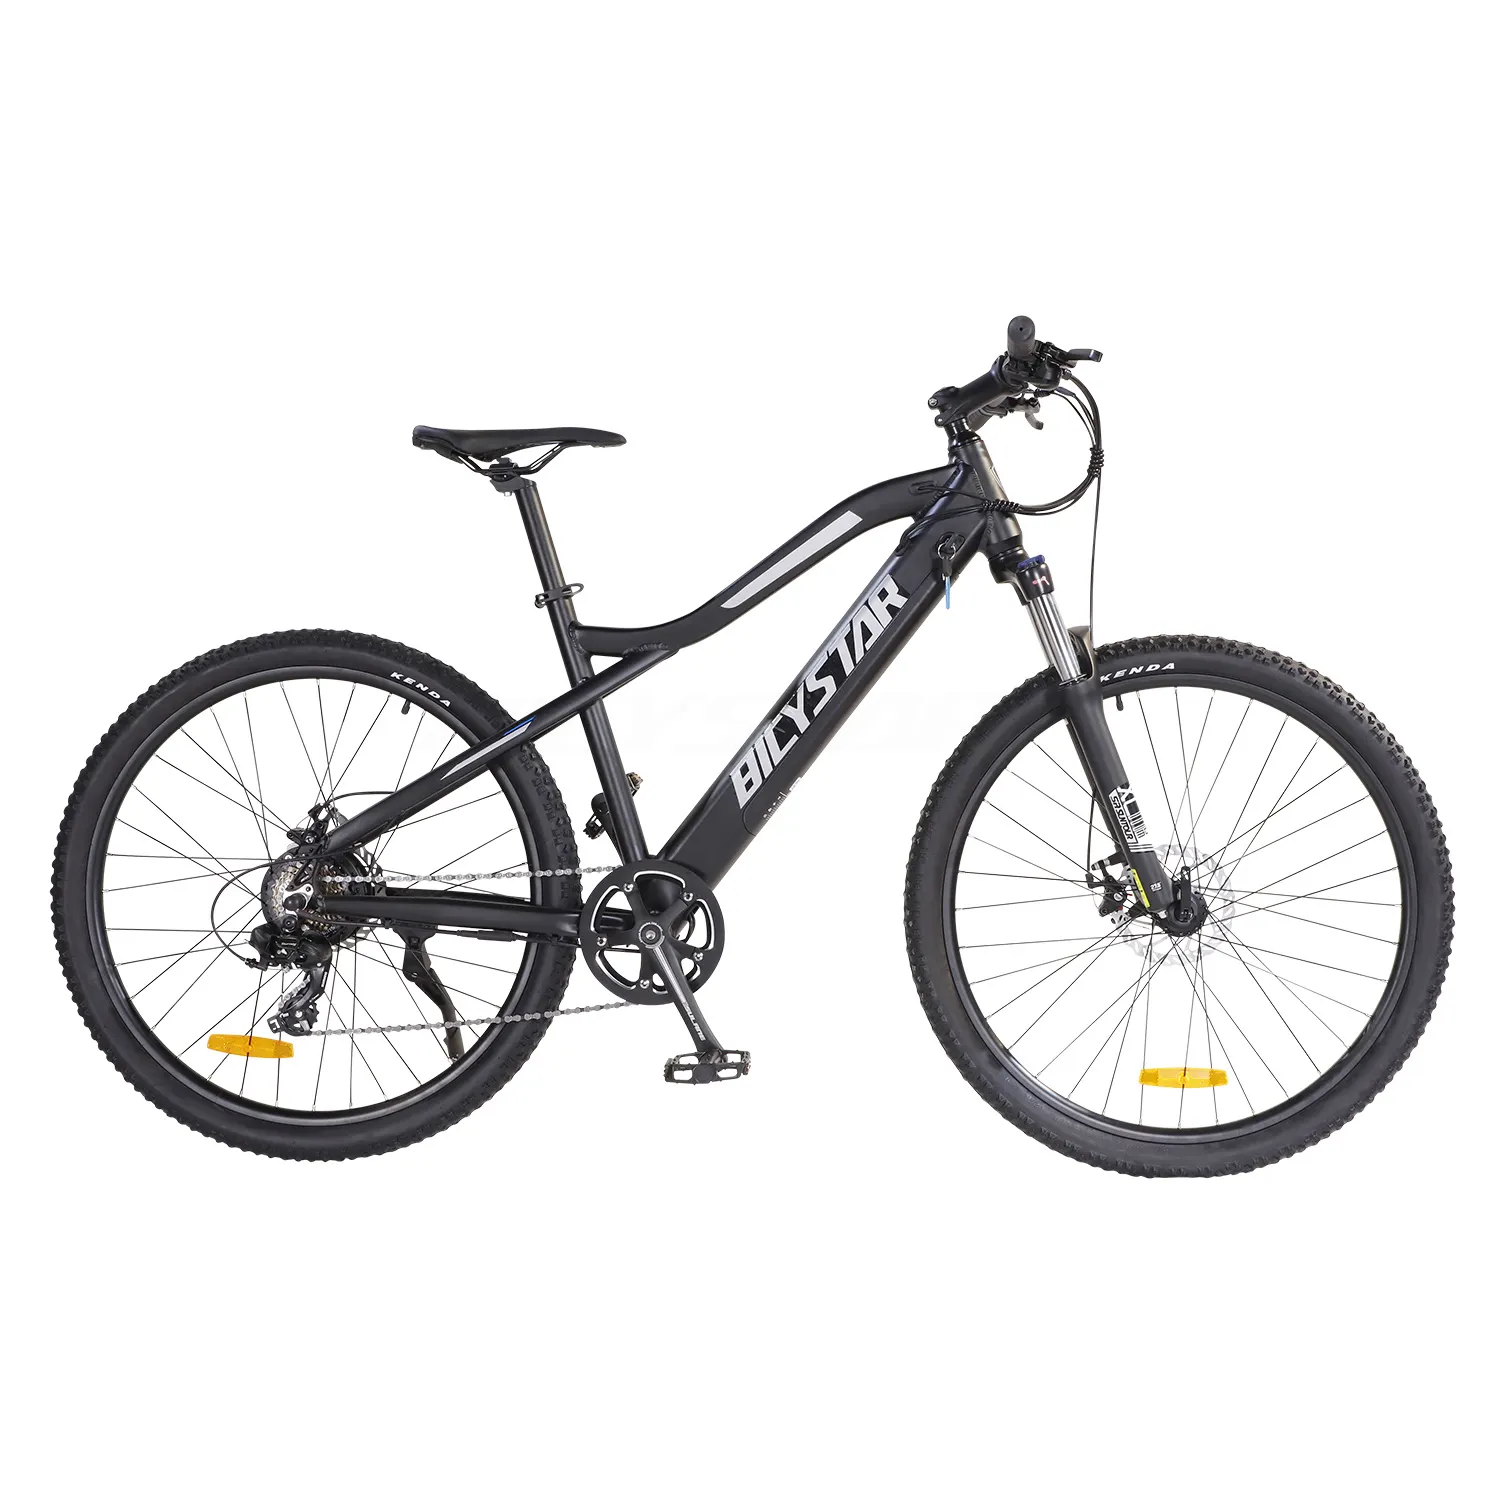 1000w bici da strada bici elettrica e bici/vendita calda mountain bici elettrica 48v batteria e-bike in vendita/acquistare ebike dalla cina